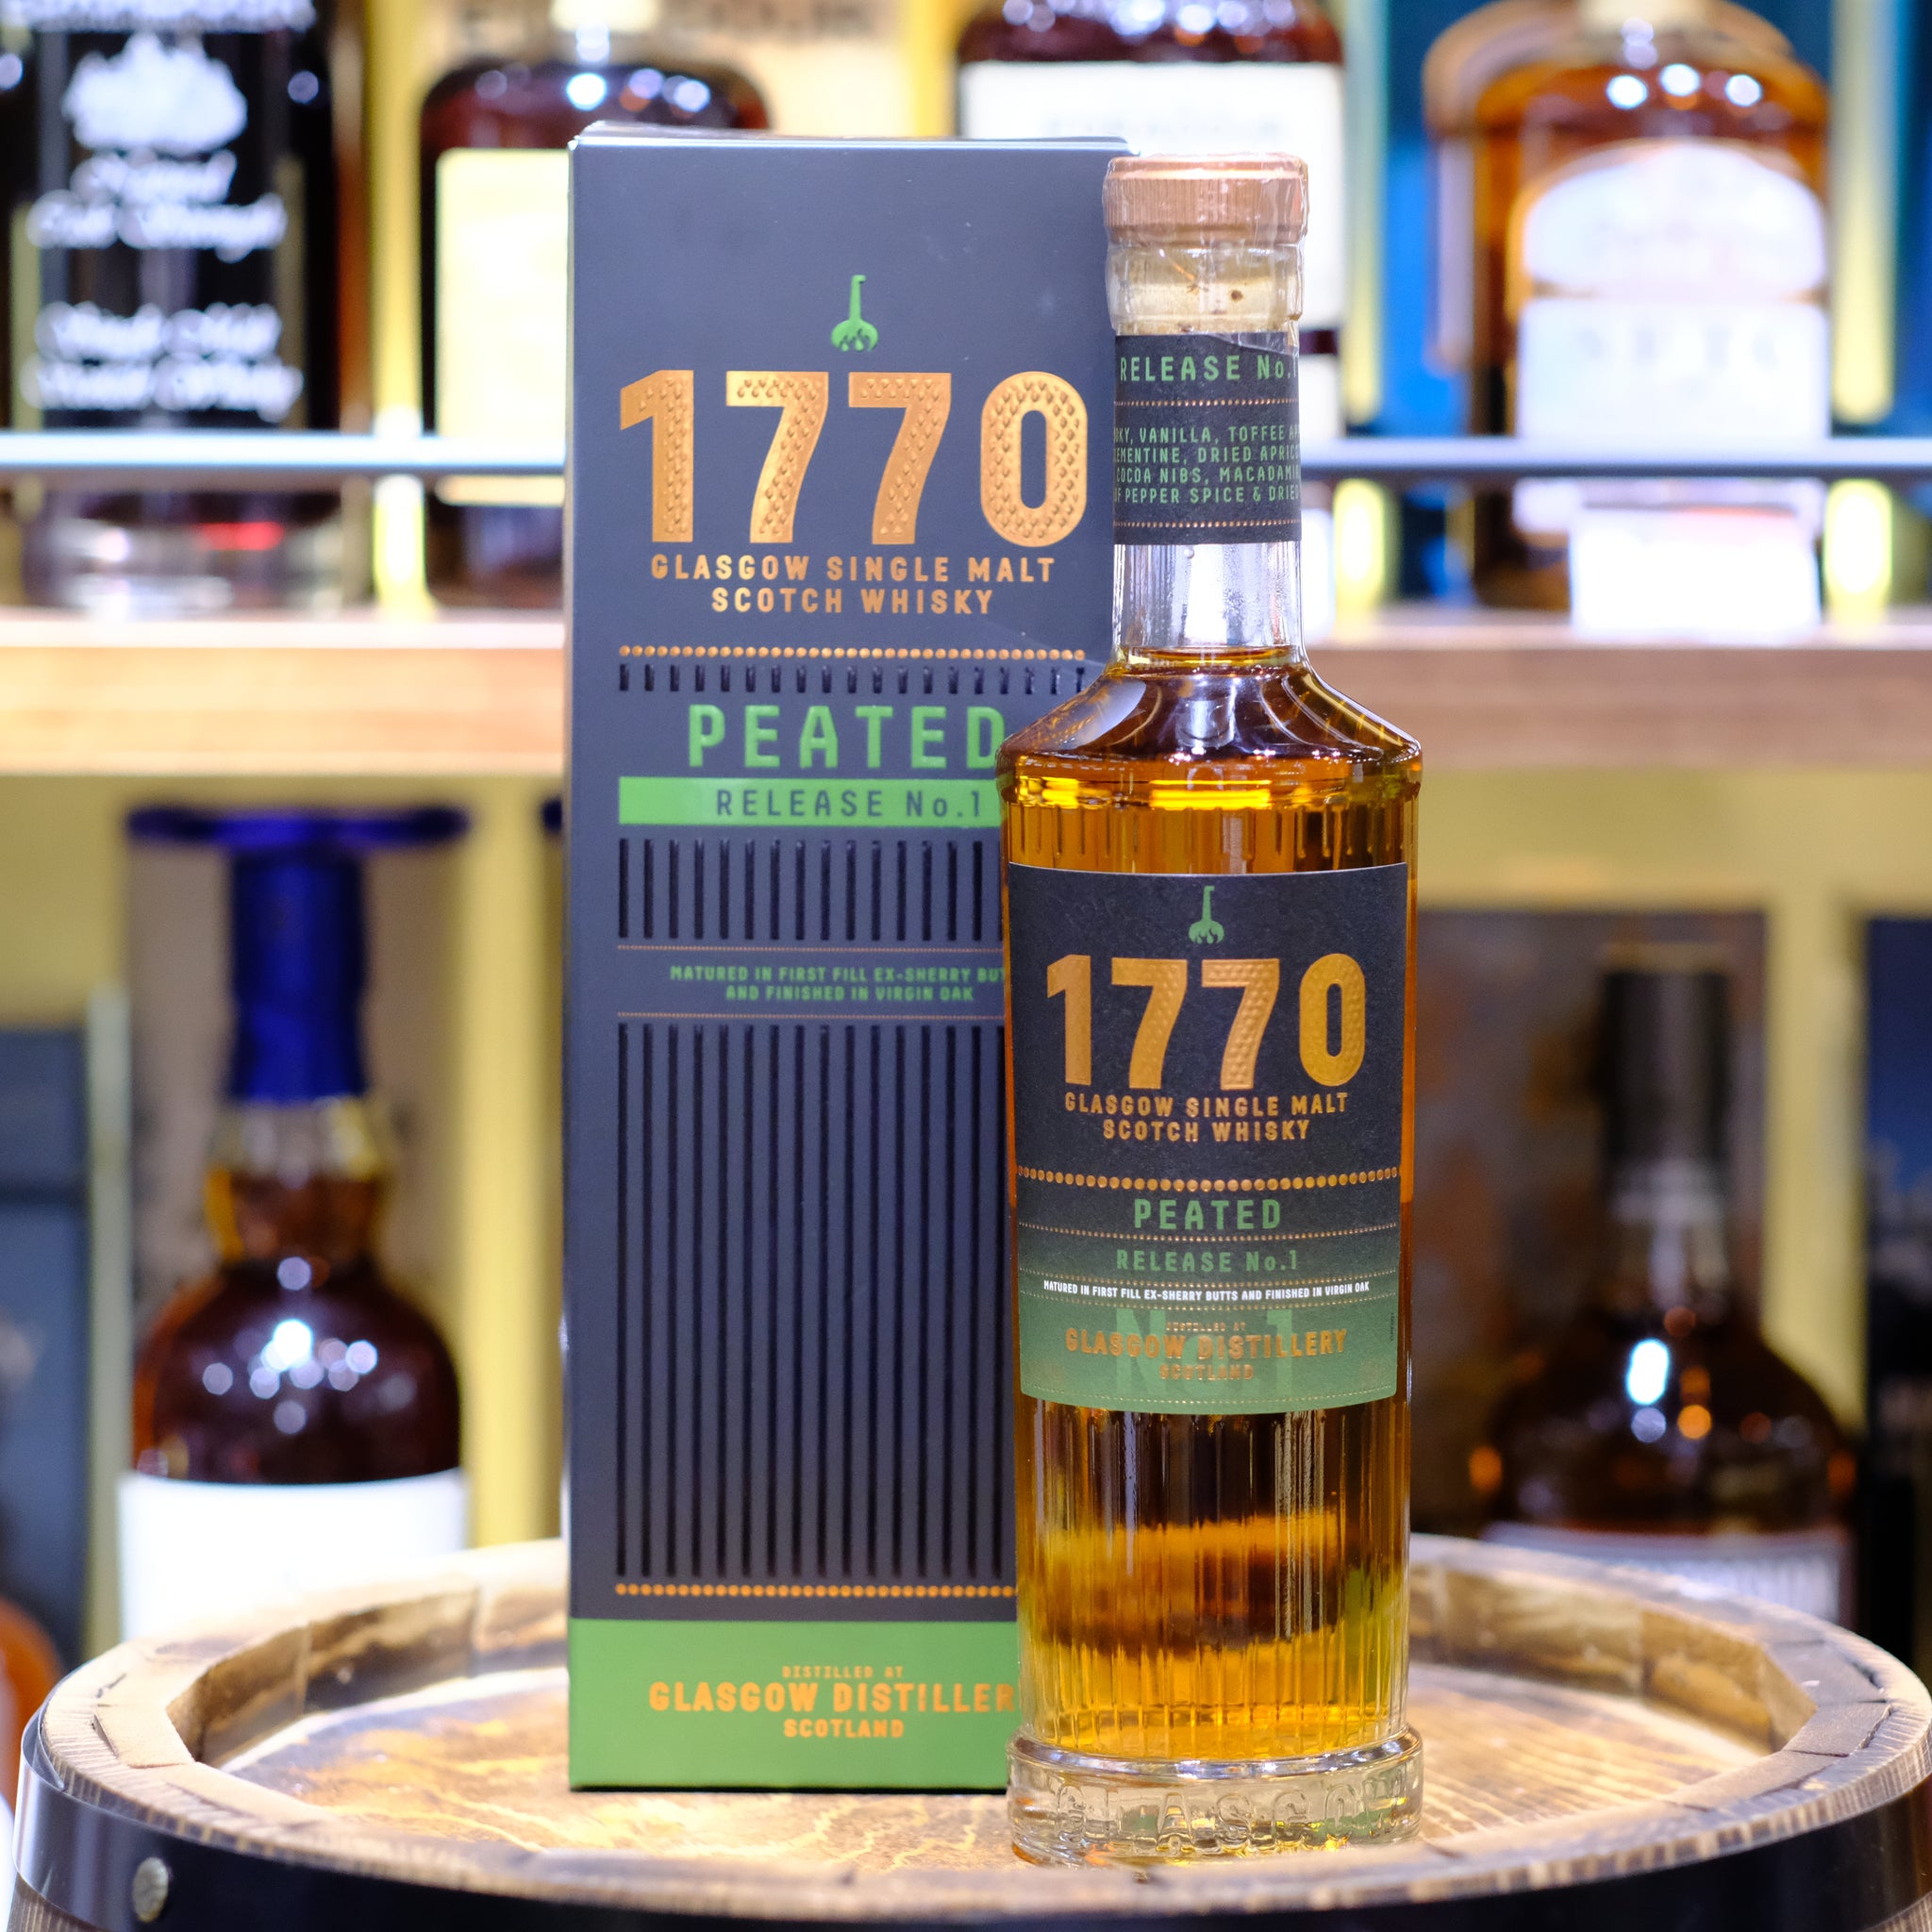 1770 Glasgow Peated Release No.1 Single Malt Scotch Whisky